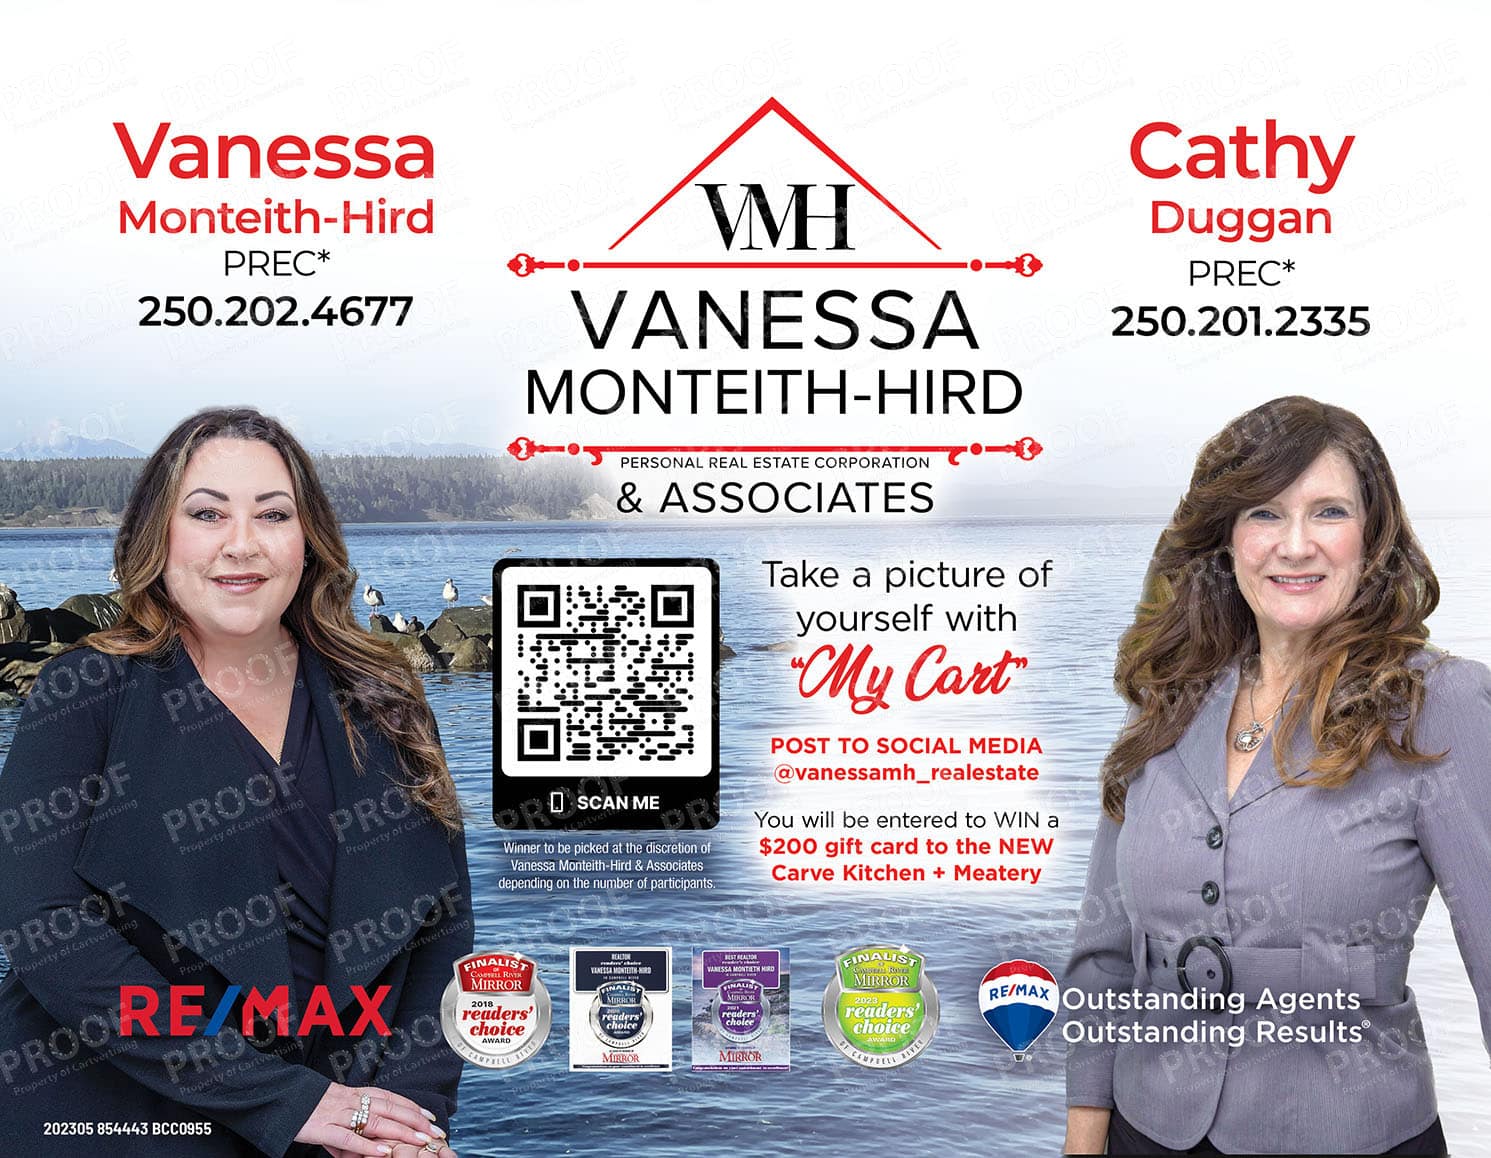 Vanessa Monteith-Hird & Associates